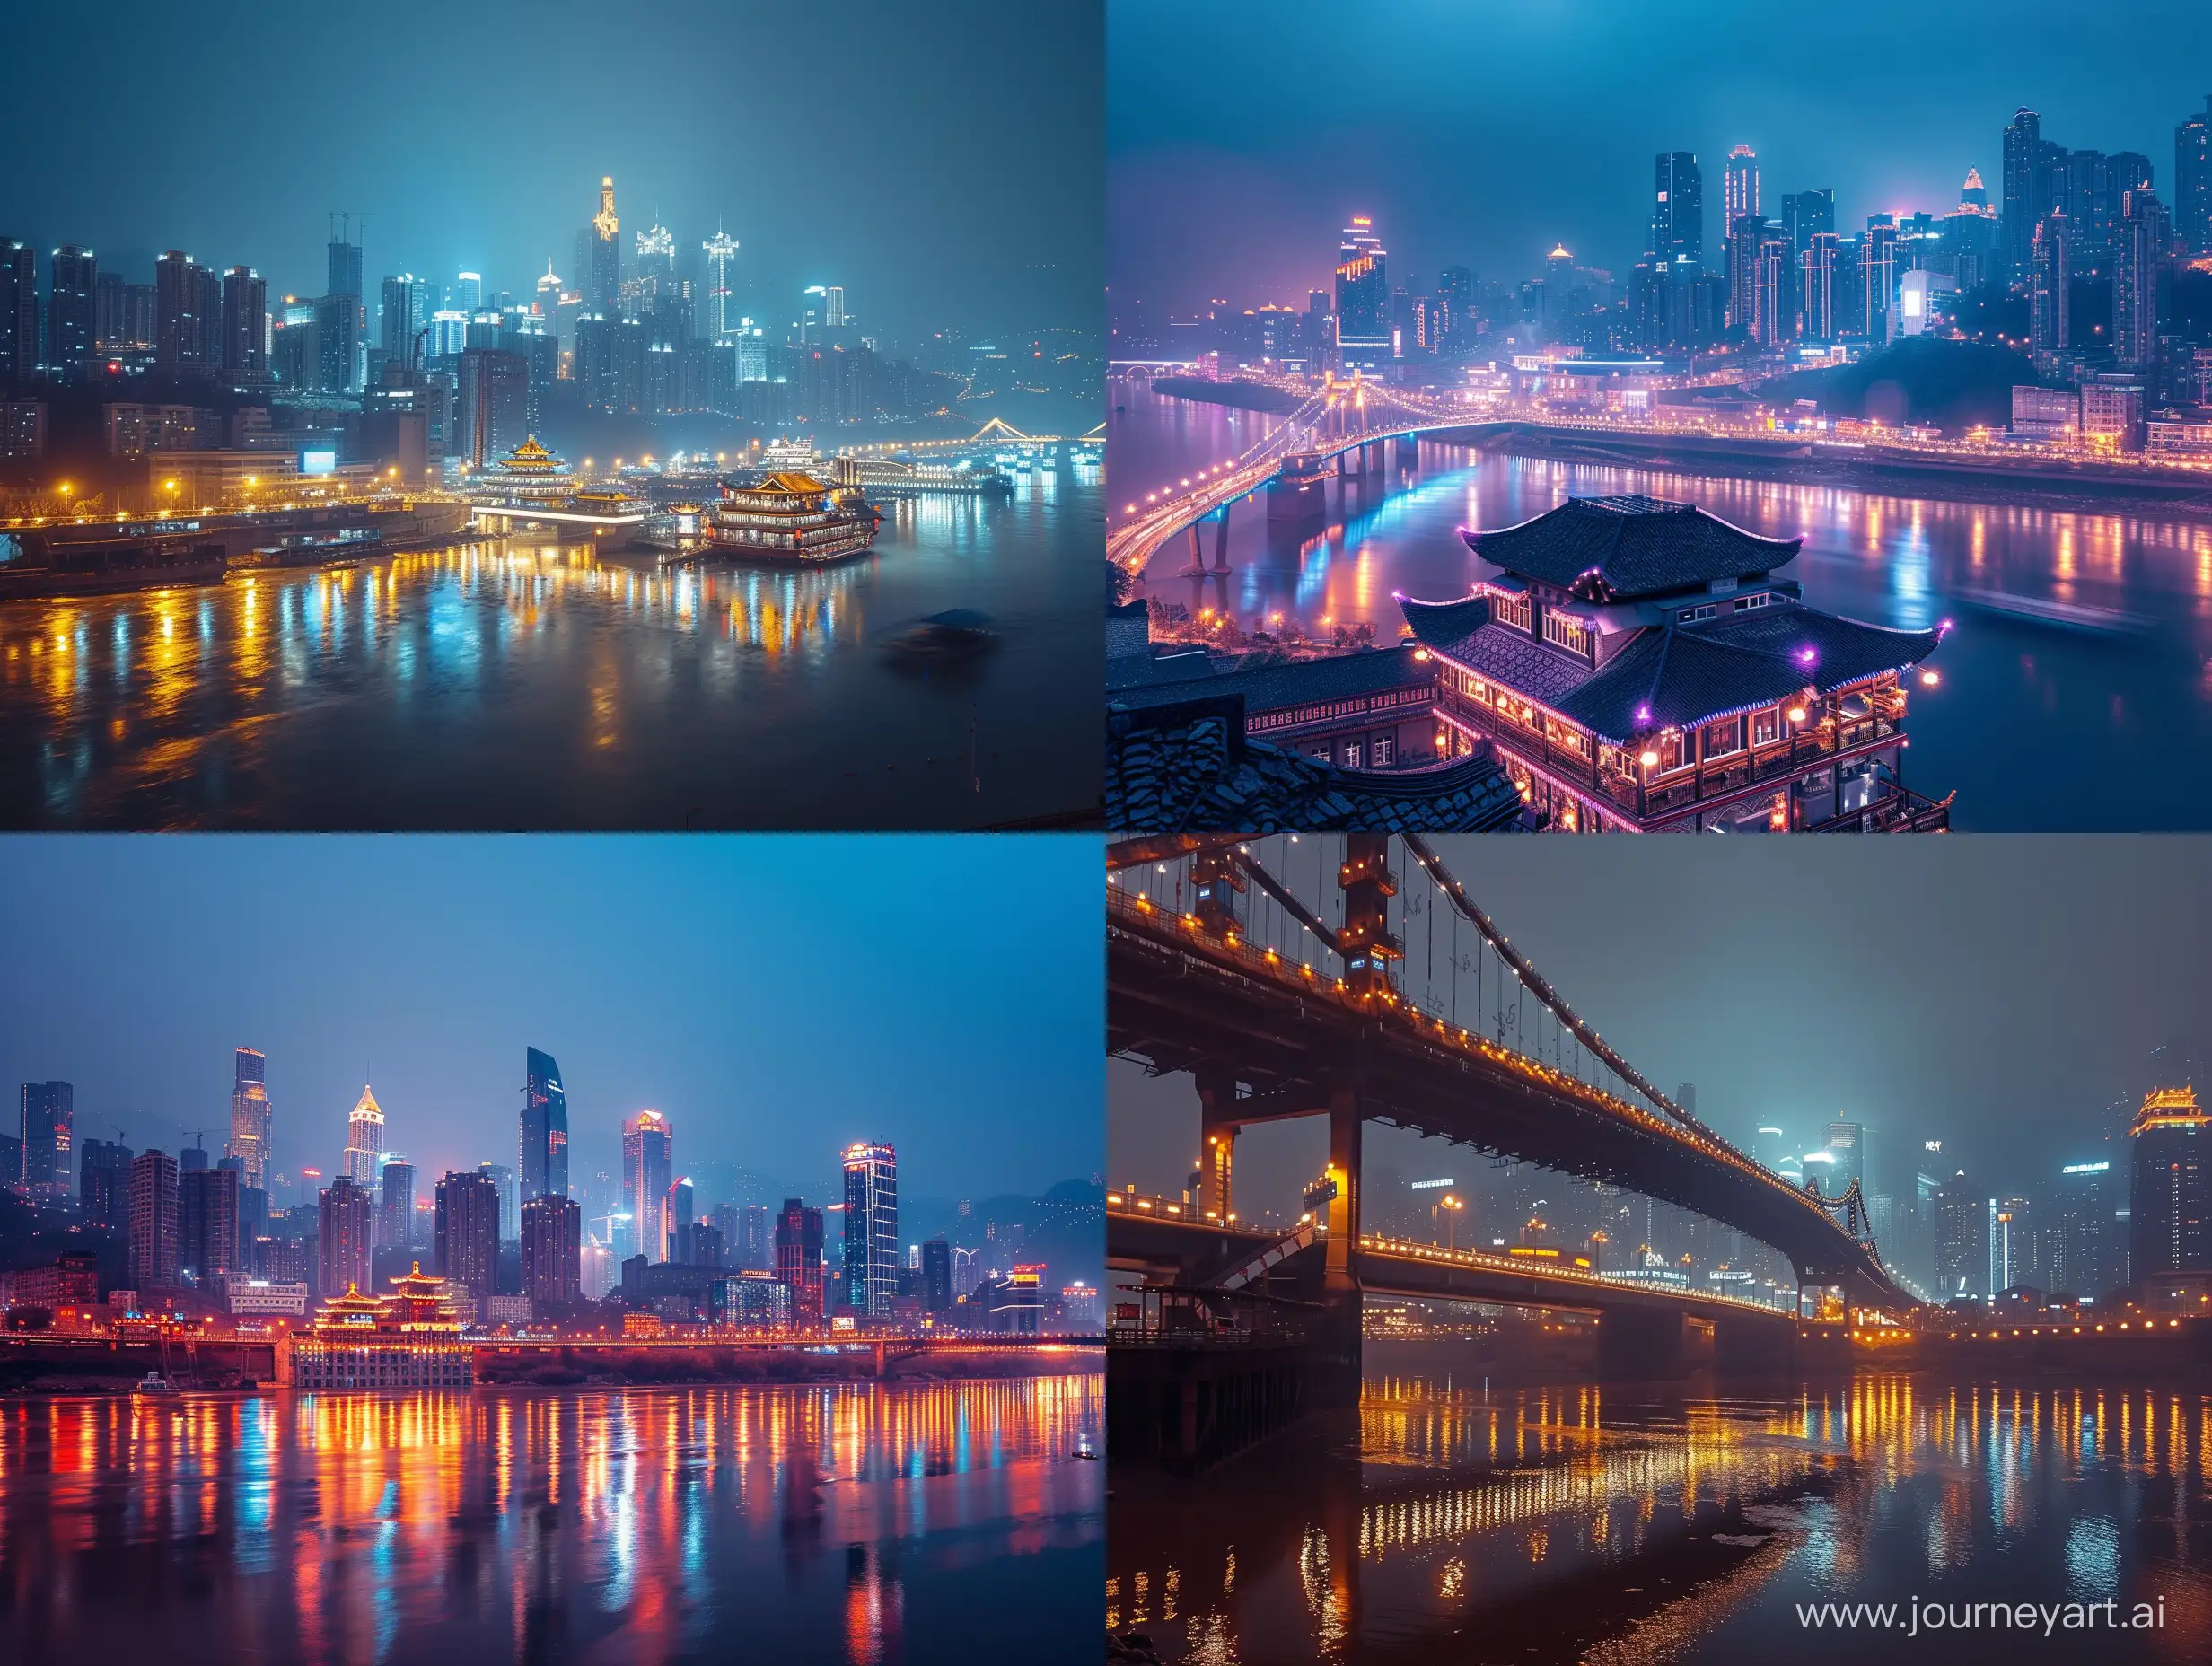 Chongqing, night time, environment, photograph, photo, skyline, architecture,

